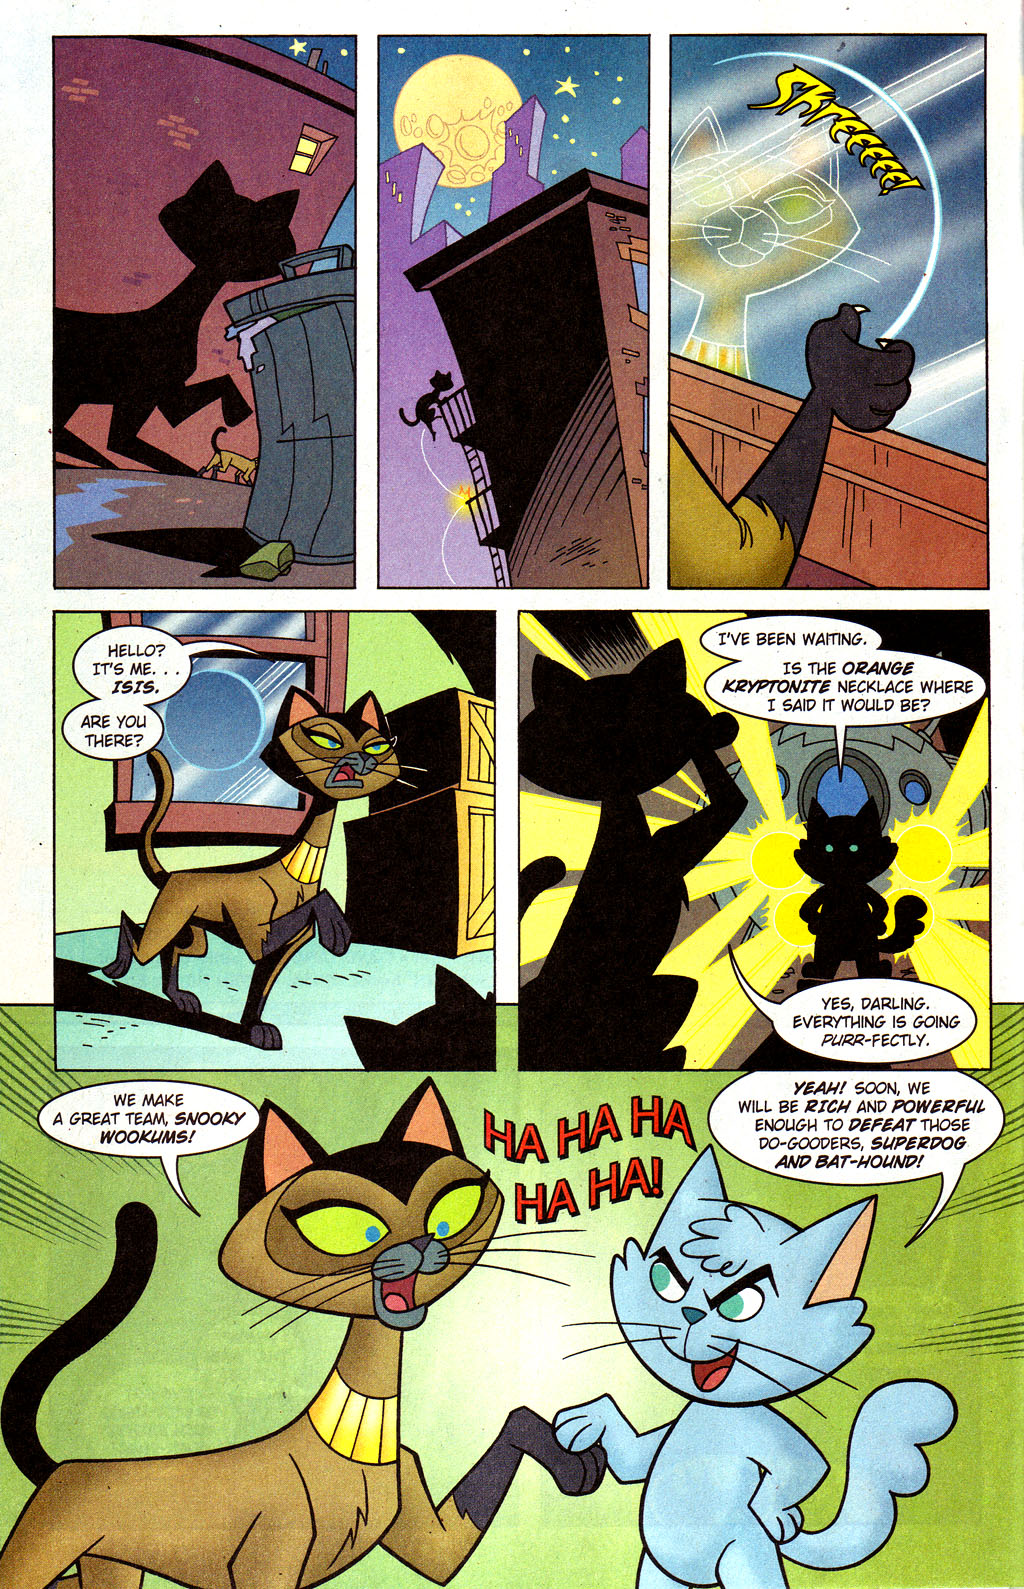 Krypto the Superdog Issue 4 | Viewcomic reading comics ...